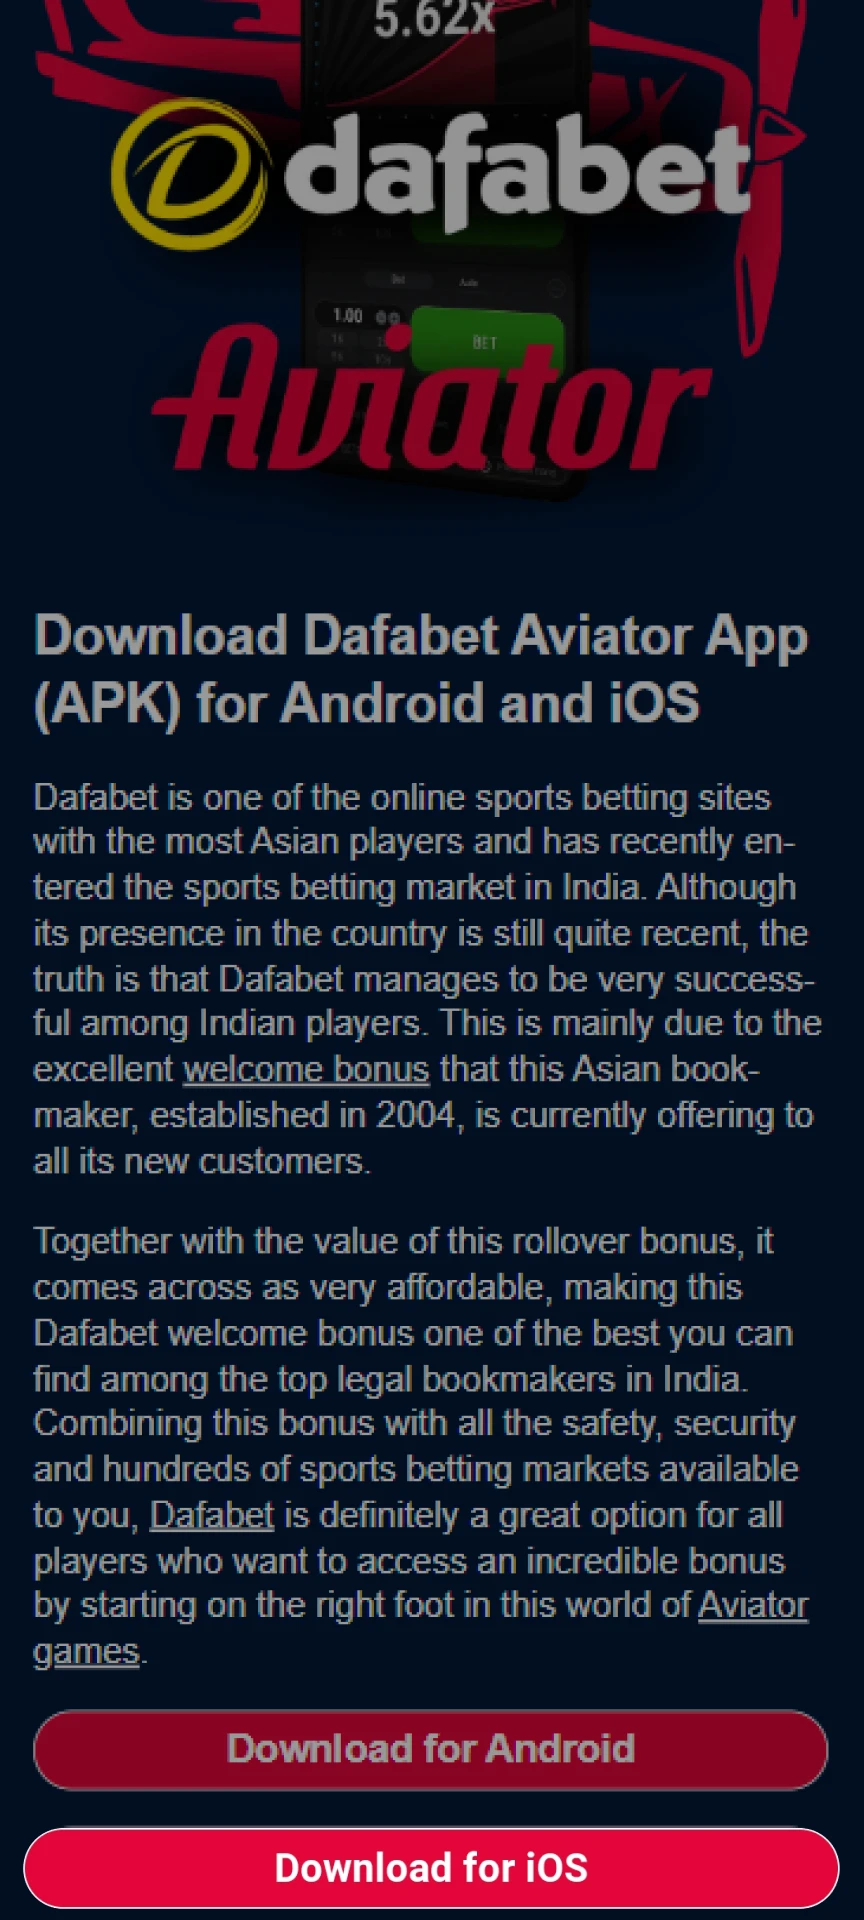 Play Aviator on Dafabet through your iOS device.